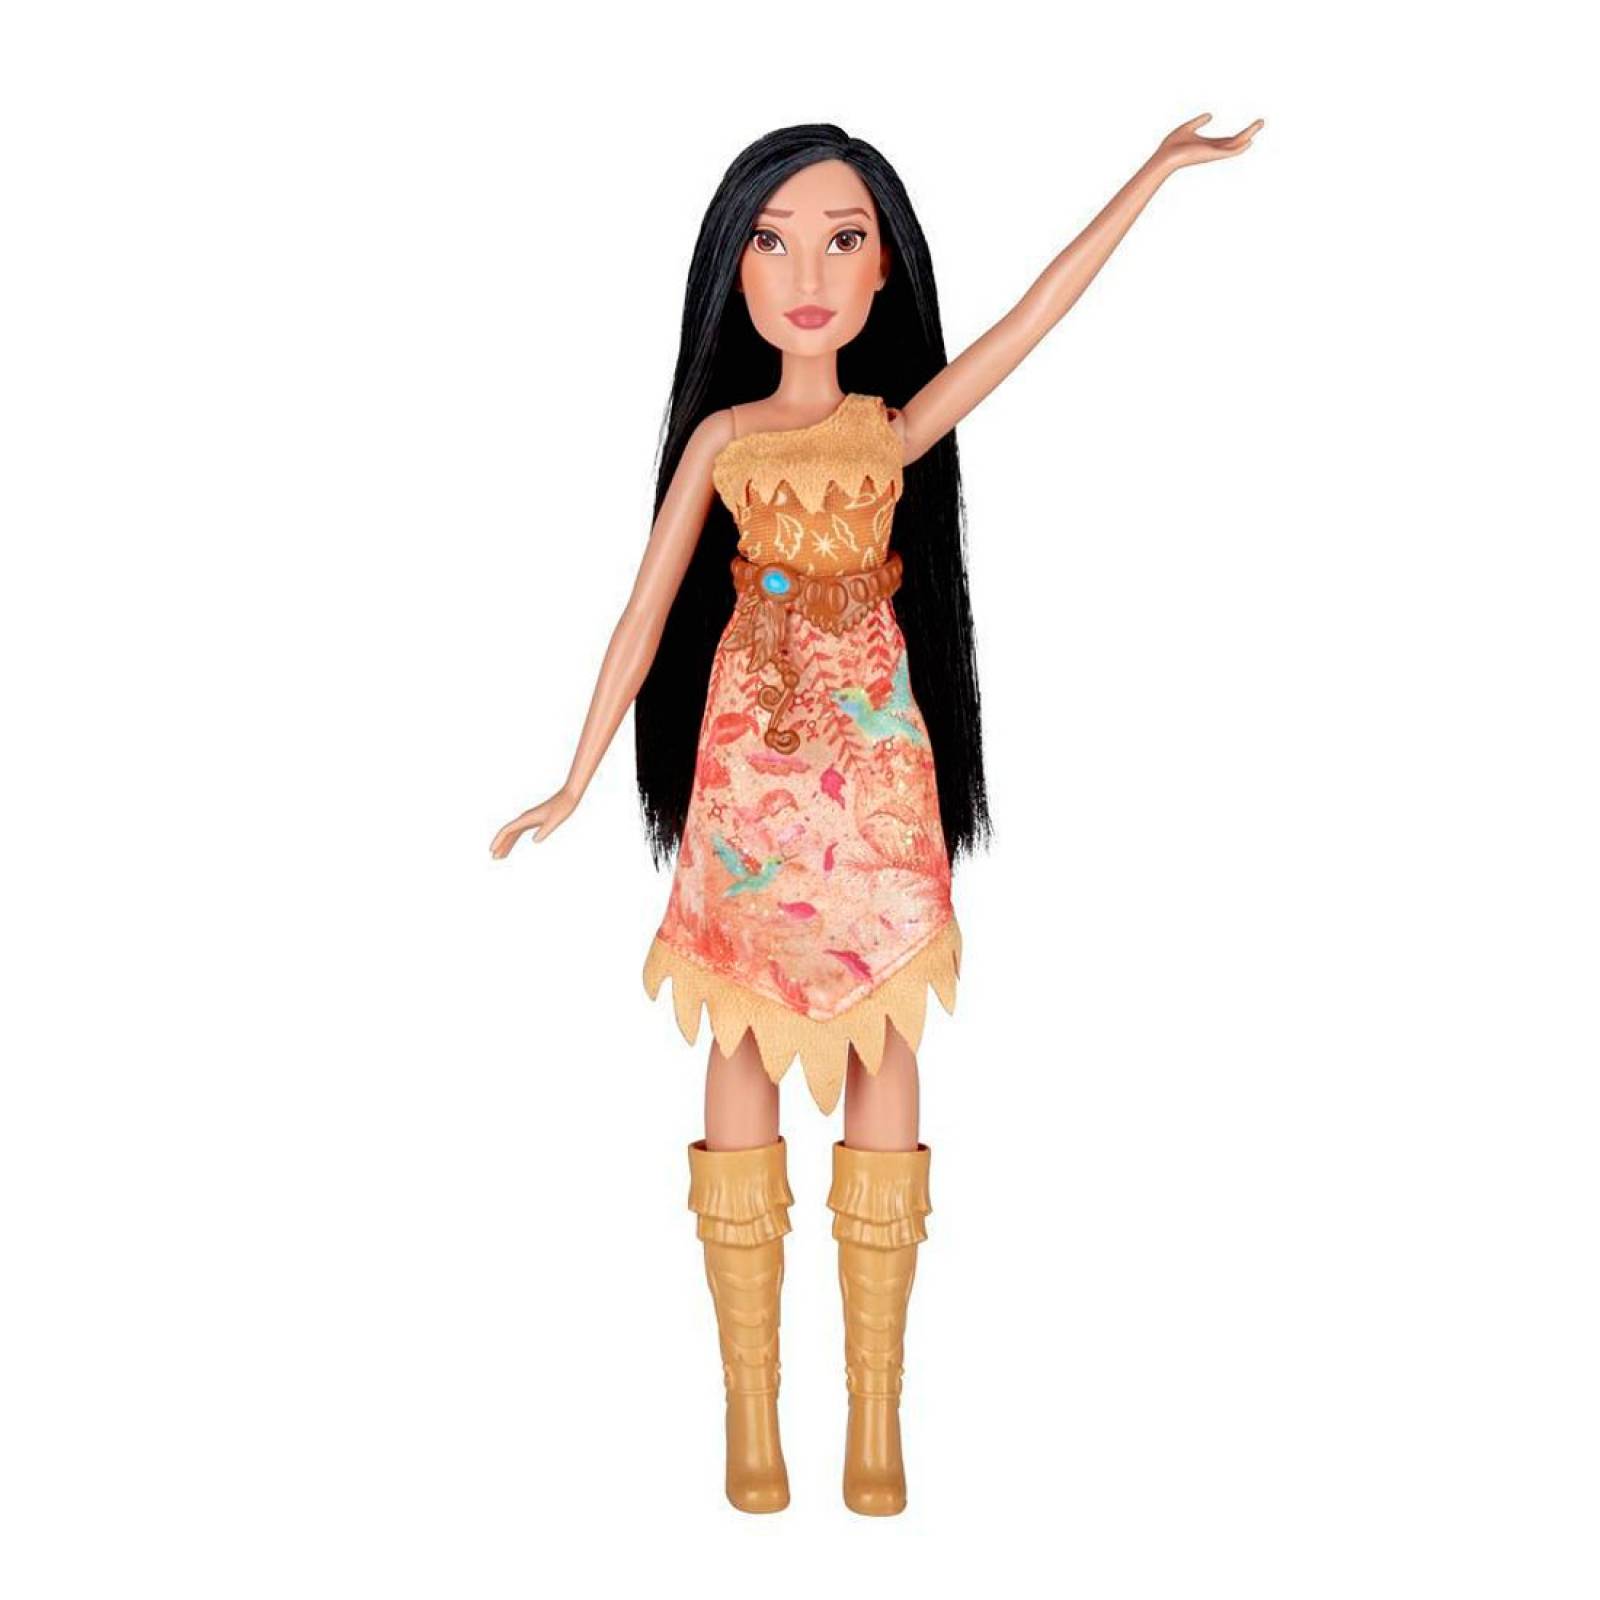 Muñeca Pocahontas Royal Shimmer Disney Princesas Hasbro